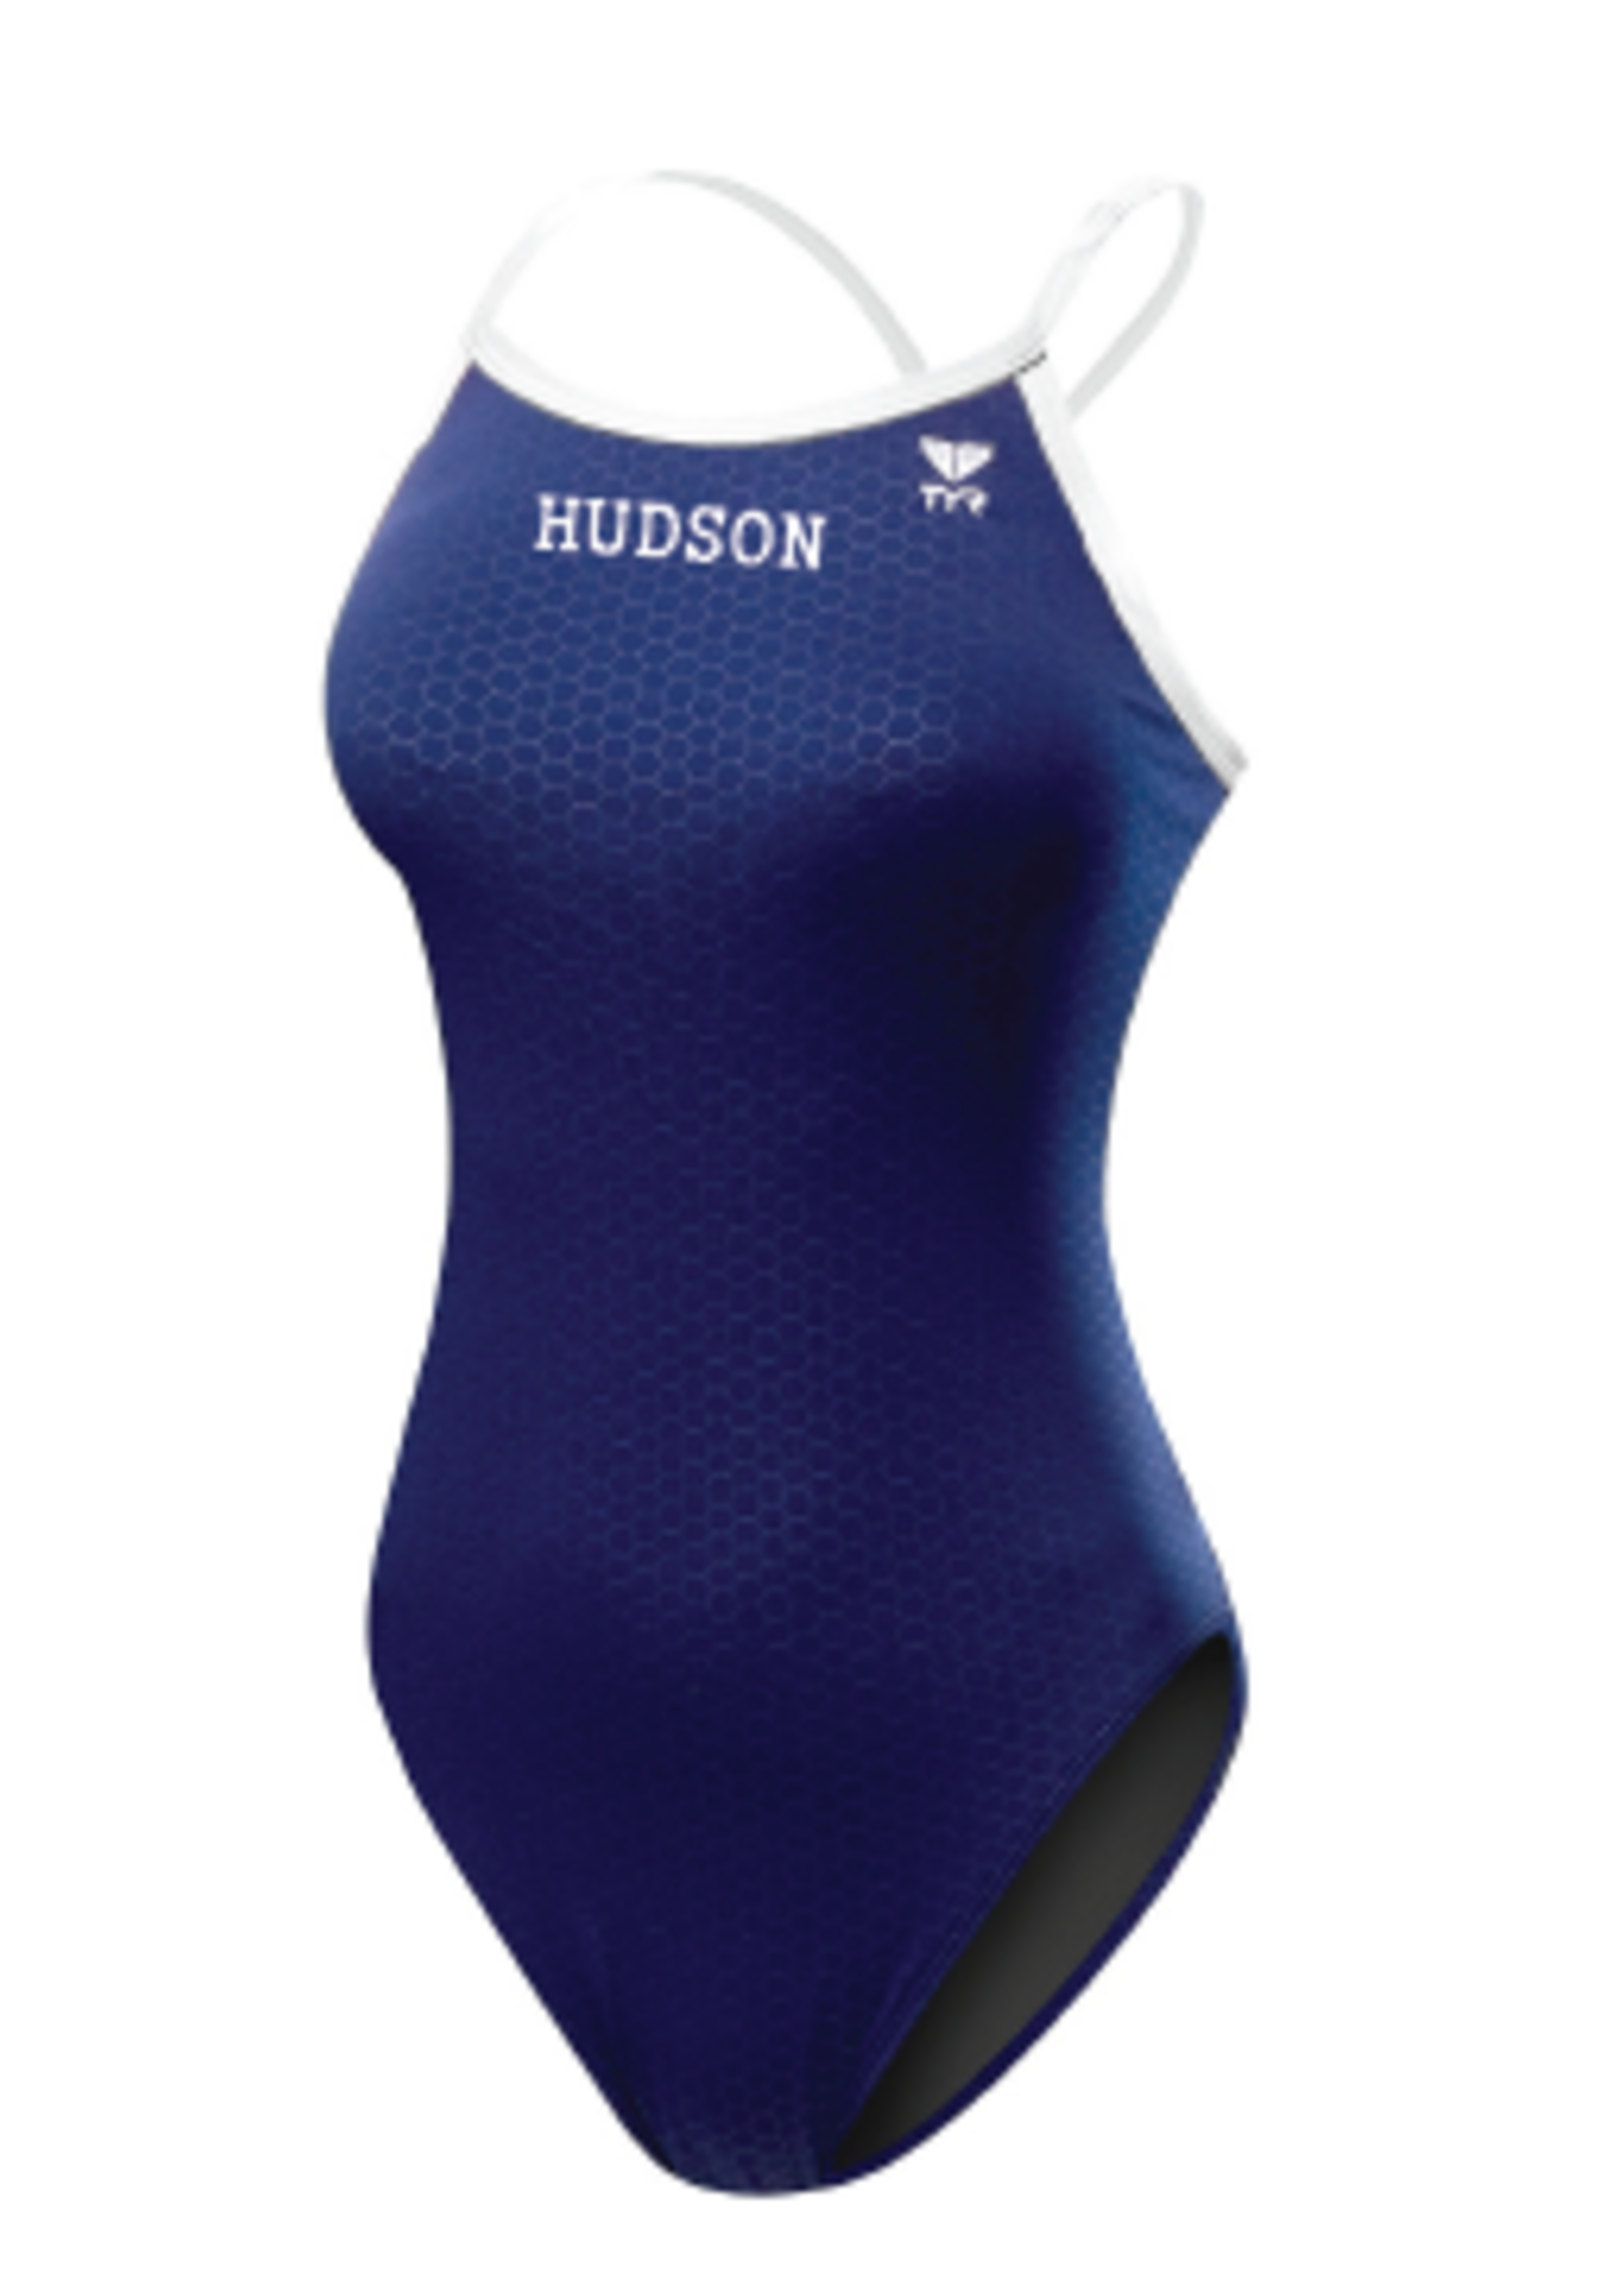 Hudson High School Swimming Suit Logo